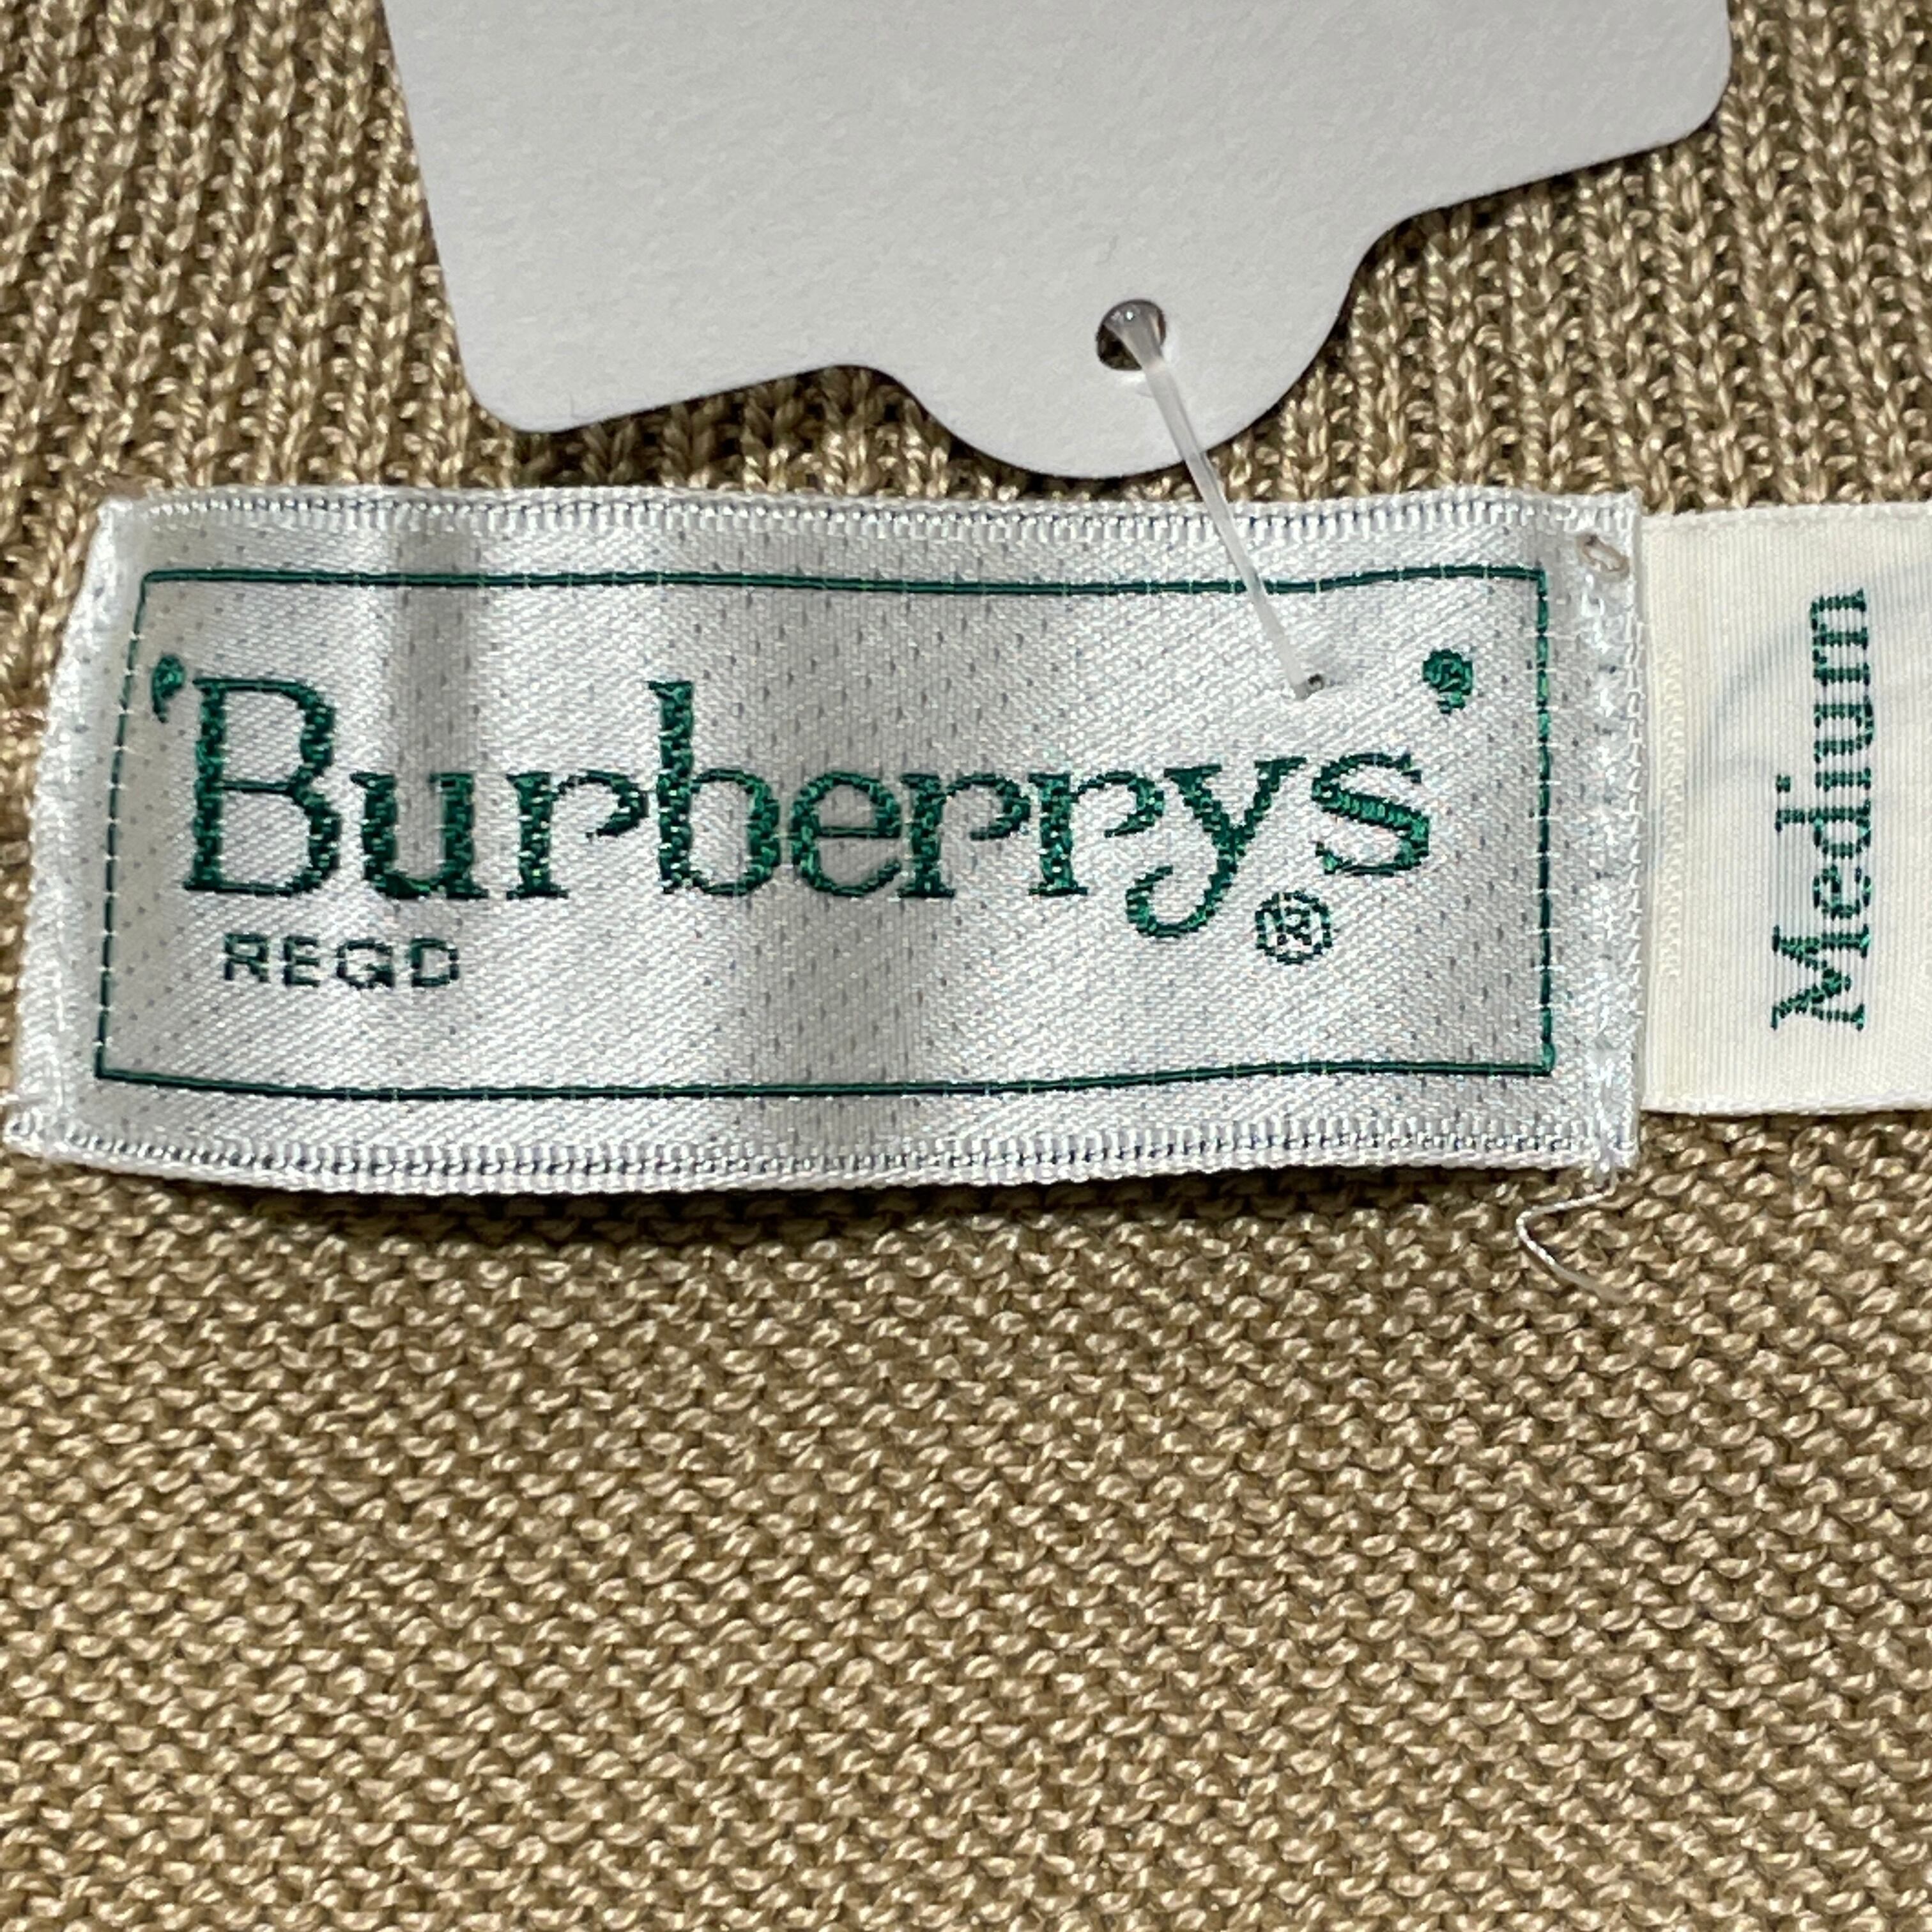 Burberry/knit vest/beige/ladies/バーバリー/ニットベスト/ベージュ